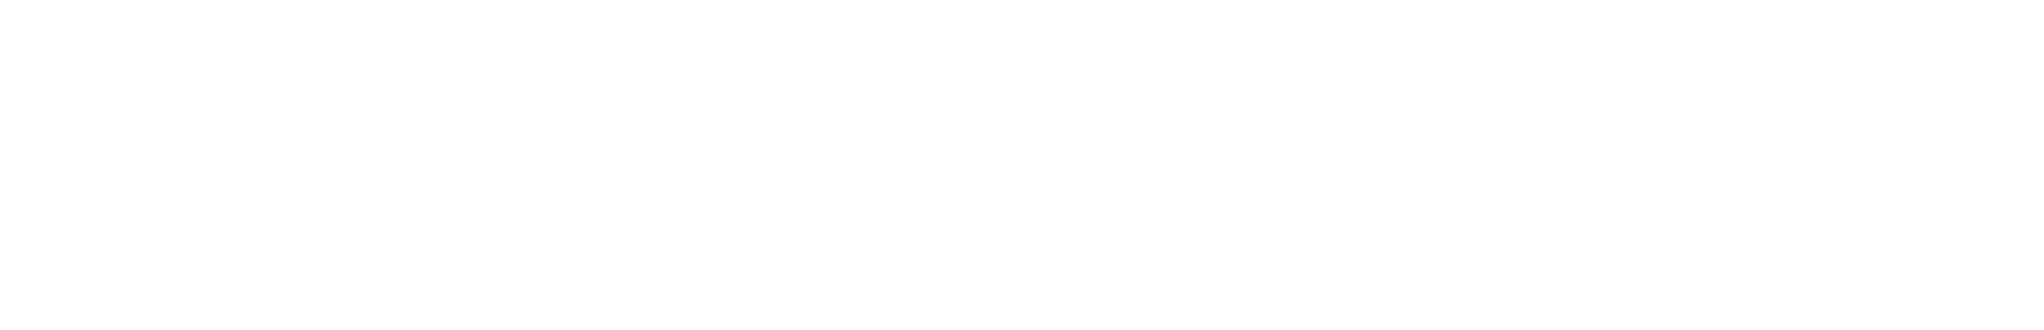 ClearCube Technology Logo